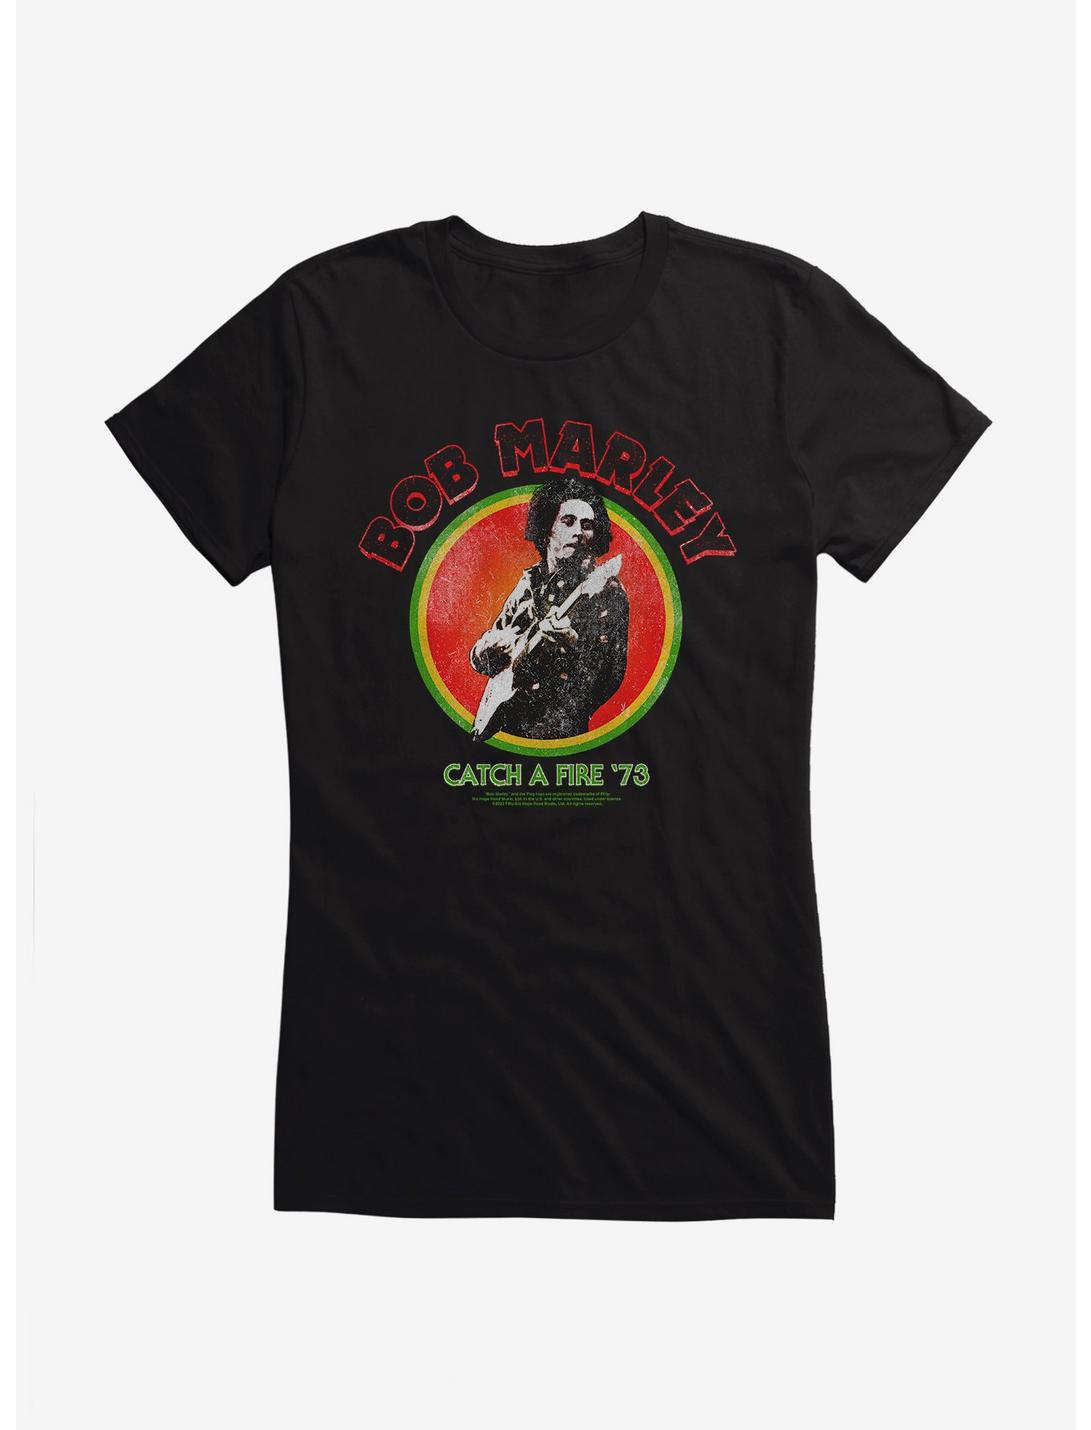 Bob Marley Catch A Fire '73 Girls T-Shirt, BLACK, hi-res